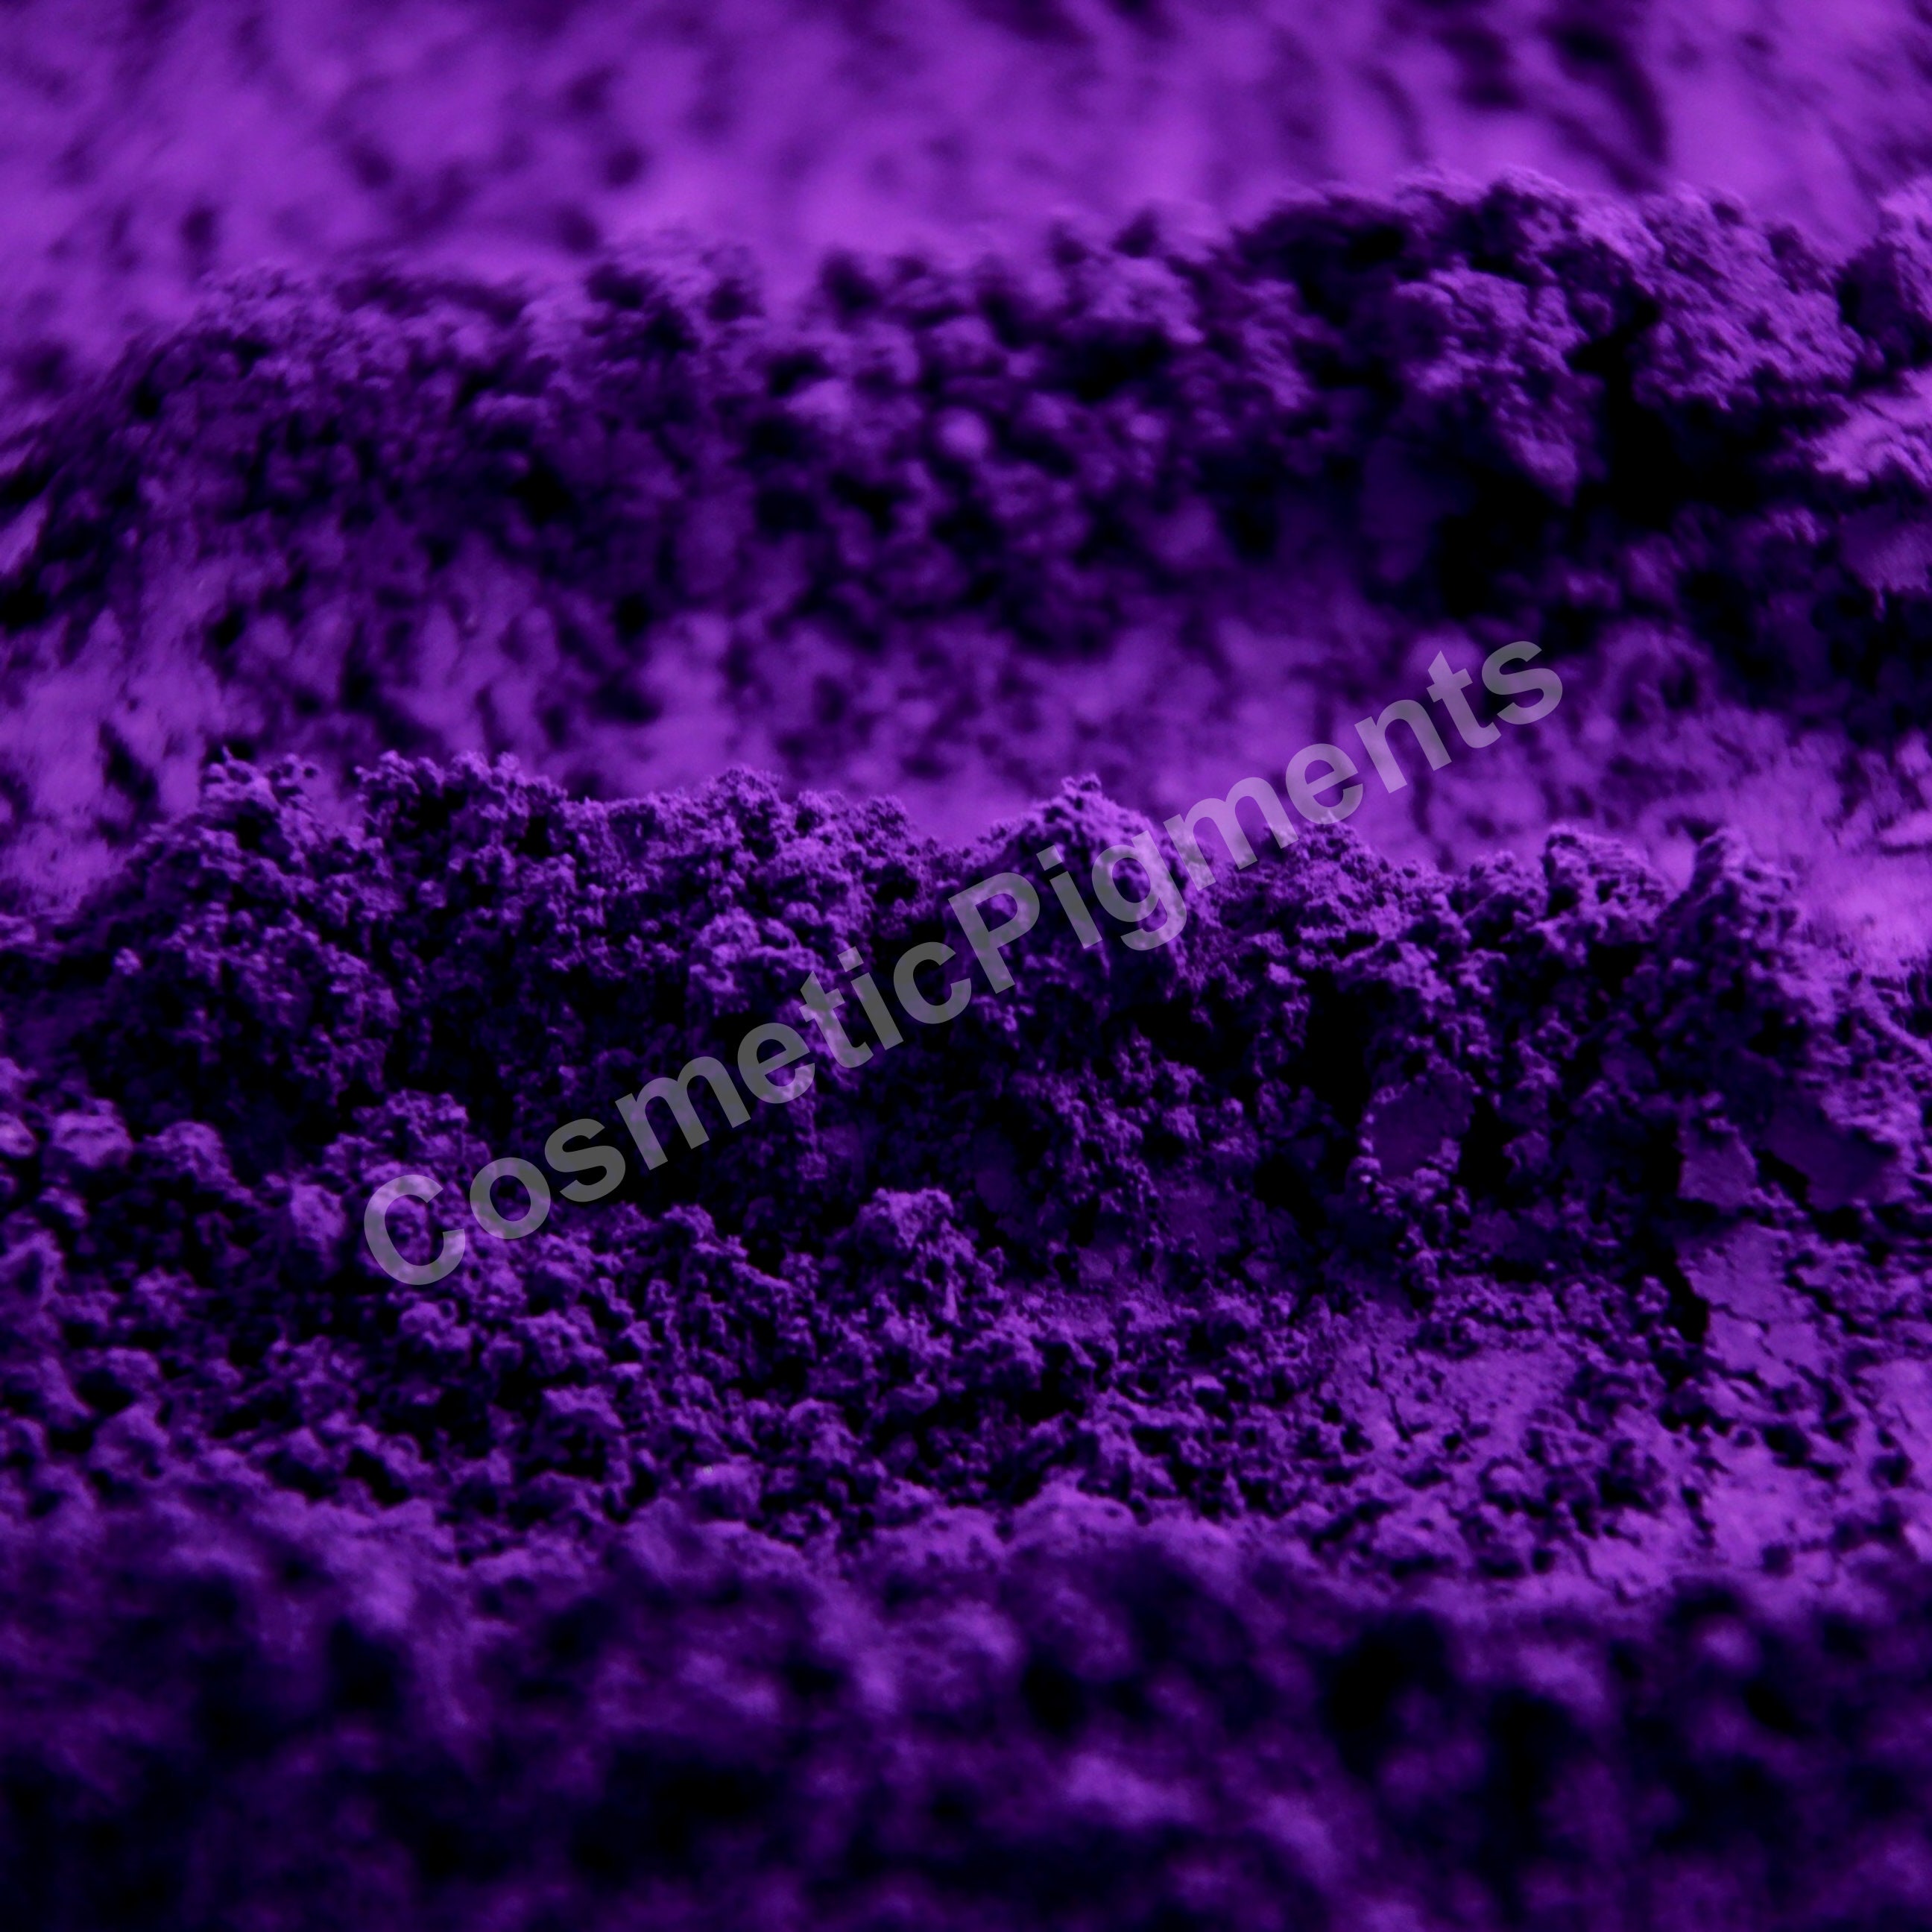 Dark brown iron oxide powder pigment usp pharmaceutical grade for diy 2 oz